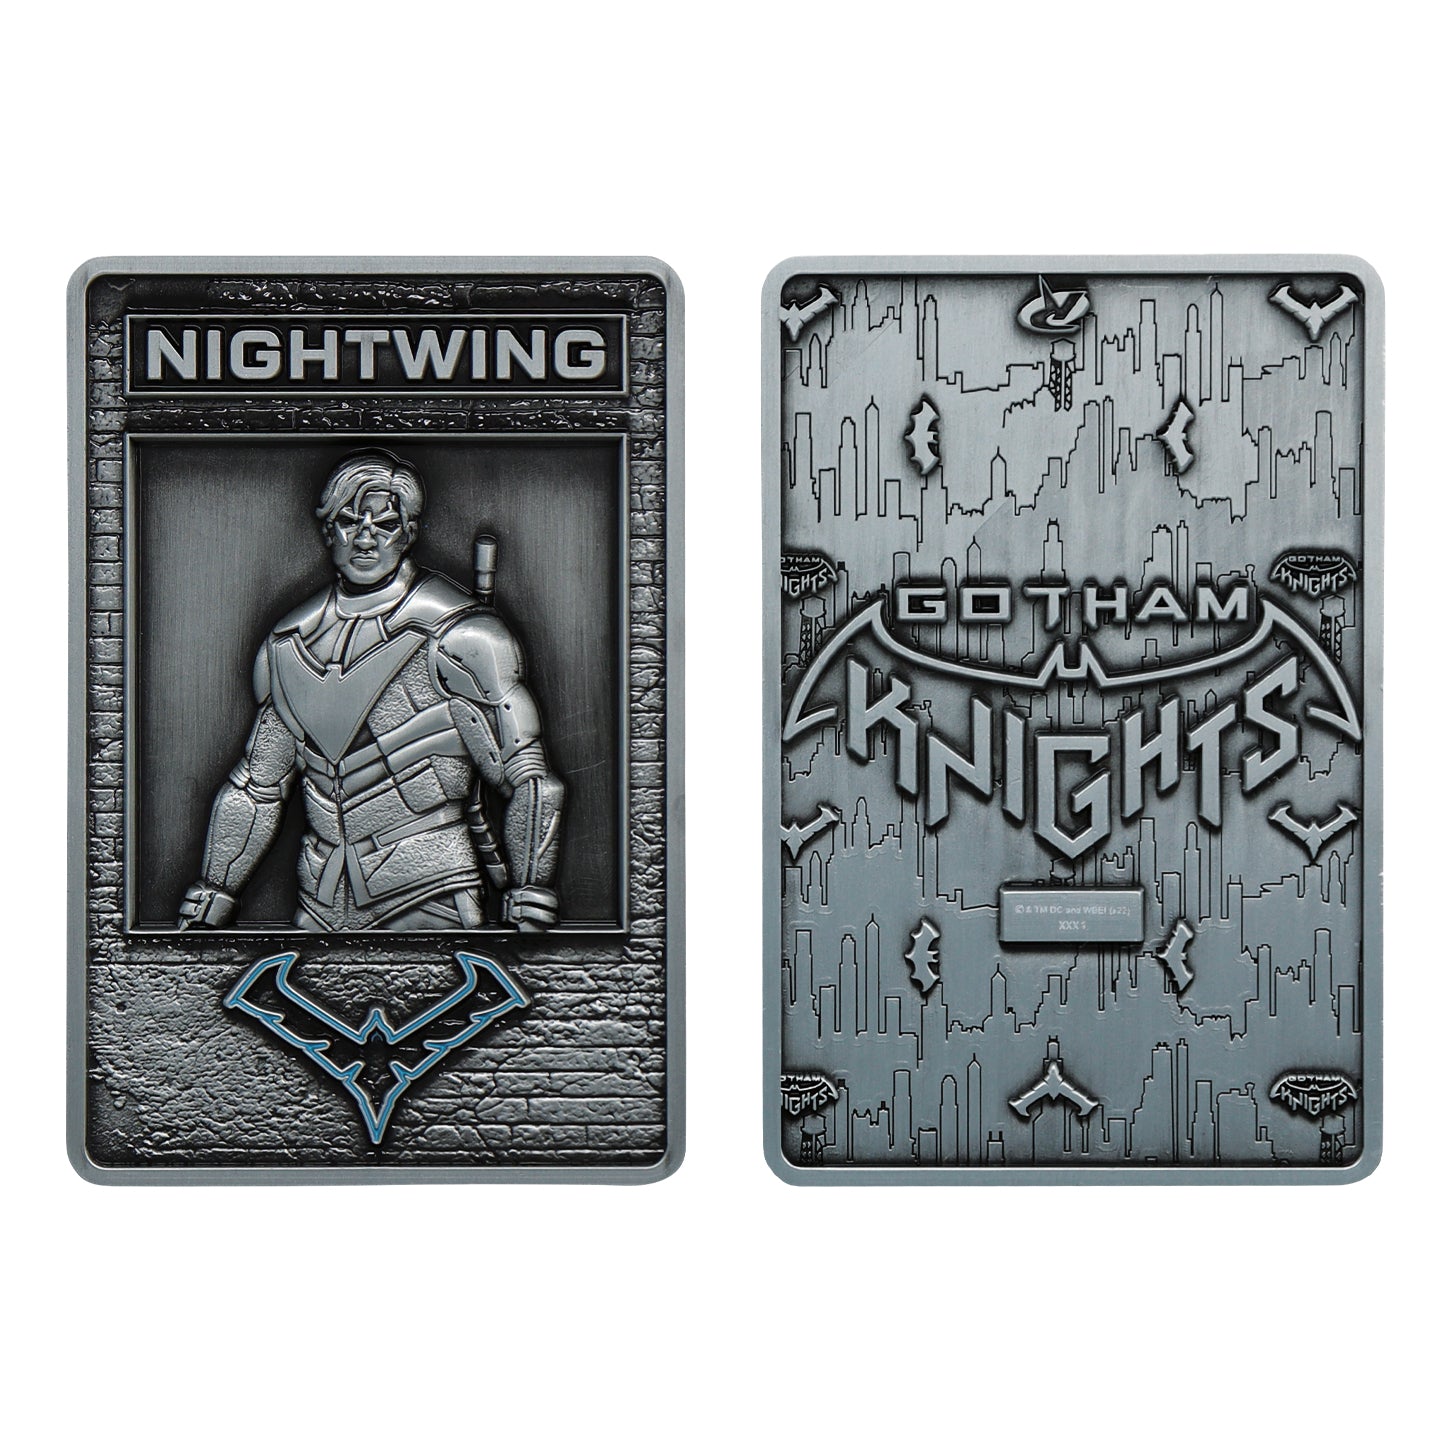 Gotham Knights Limited Edition Nightwing Ingot